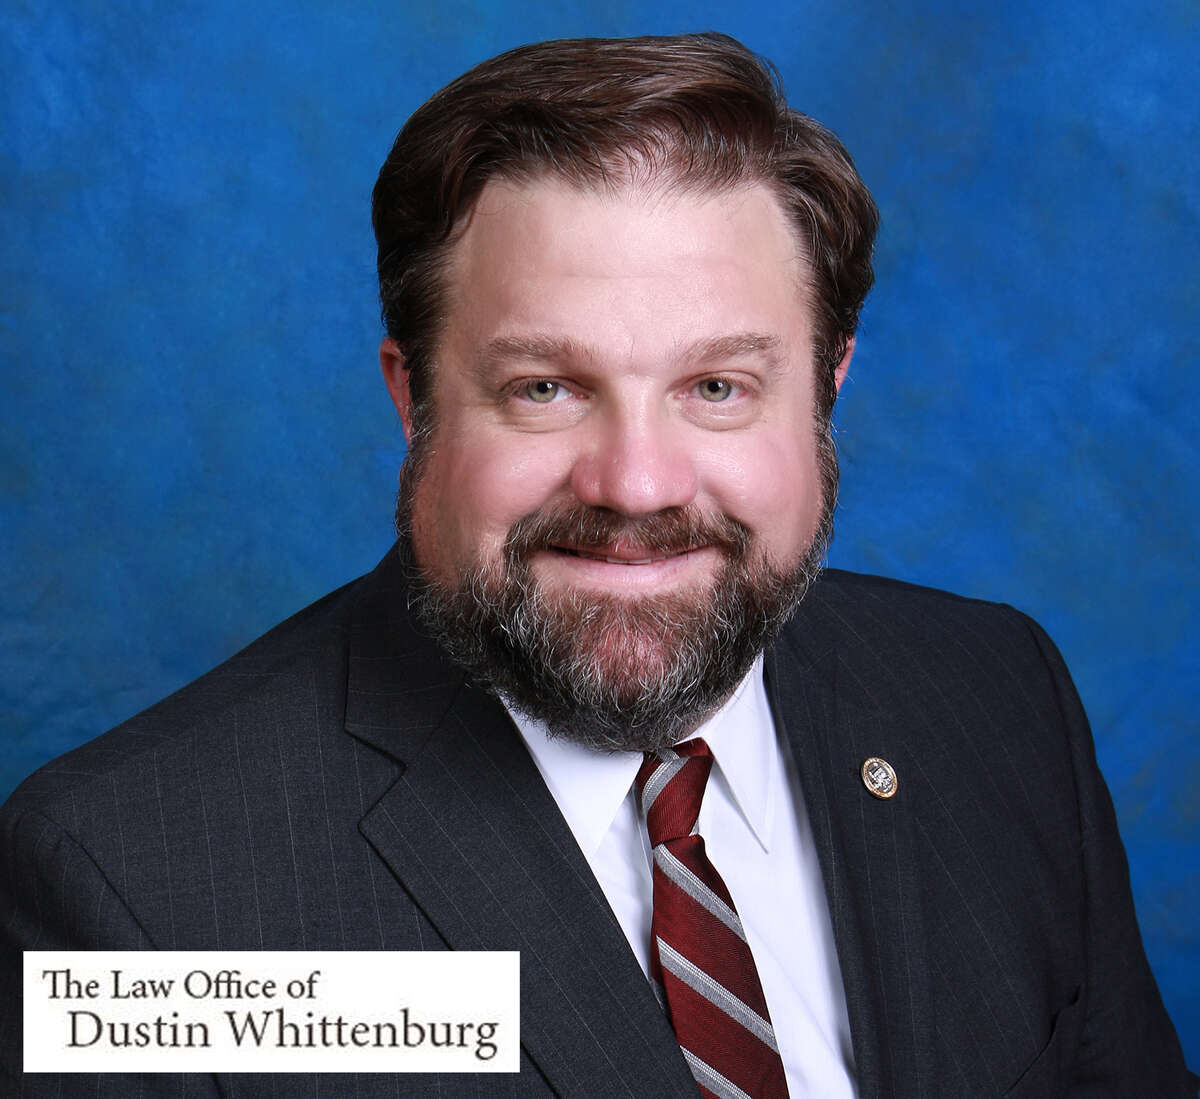 Mr. Dustin S. Whittenburg of the Law Office of Dustin Whittenburg 